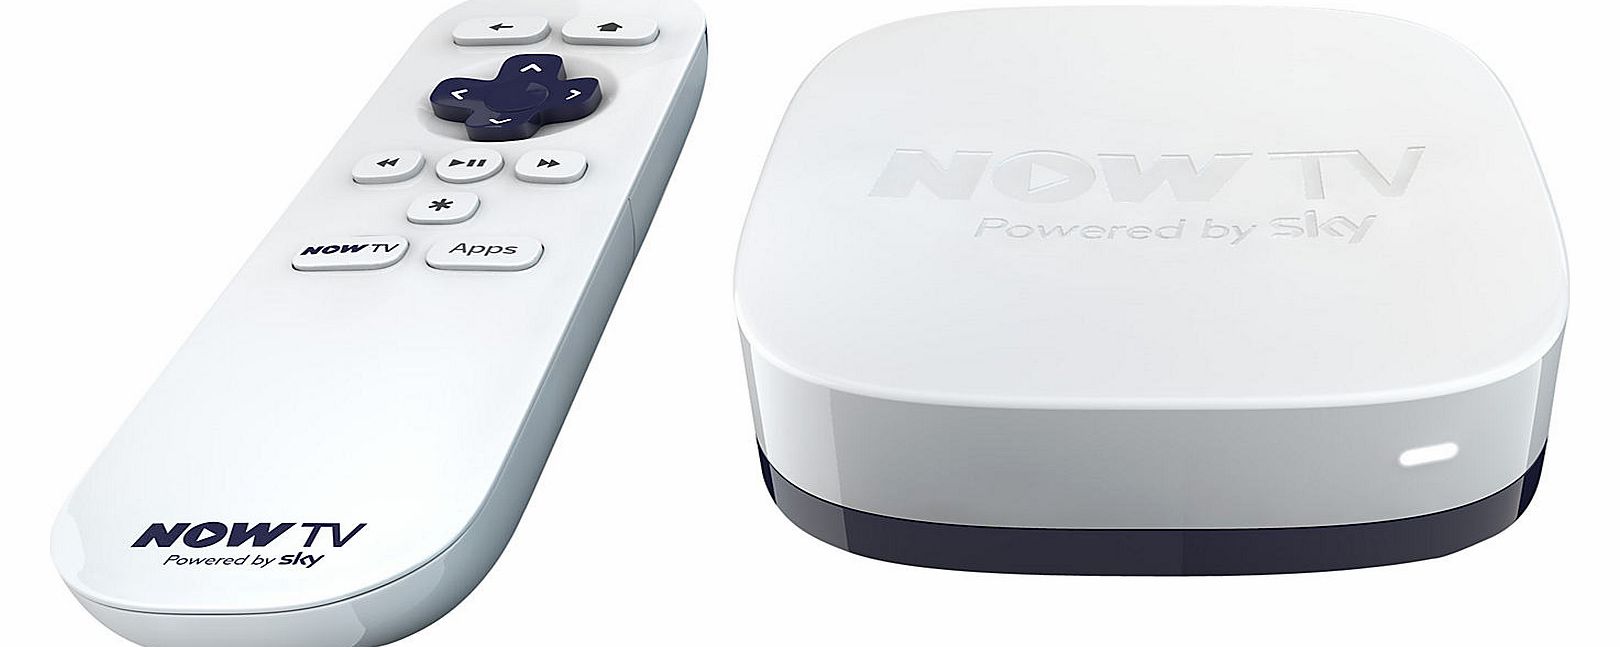 NTVSB3 Media Streaming Devices